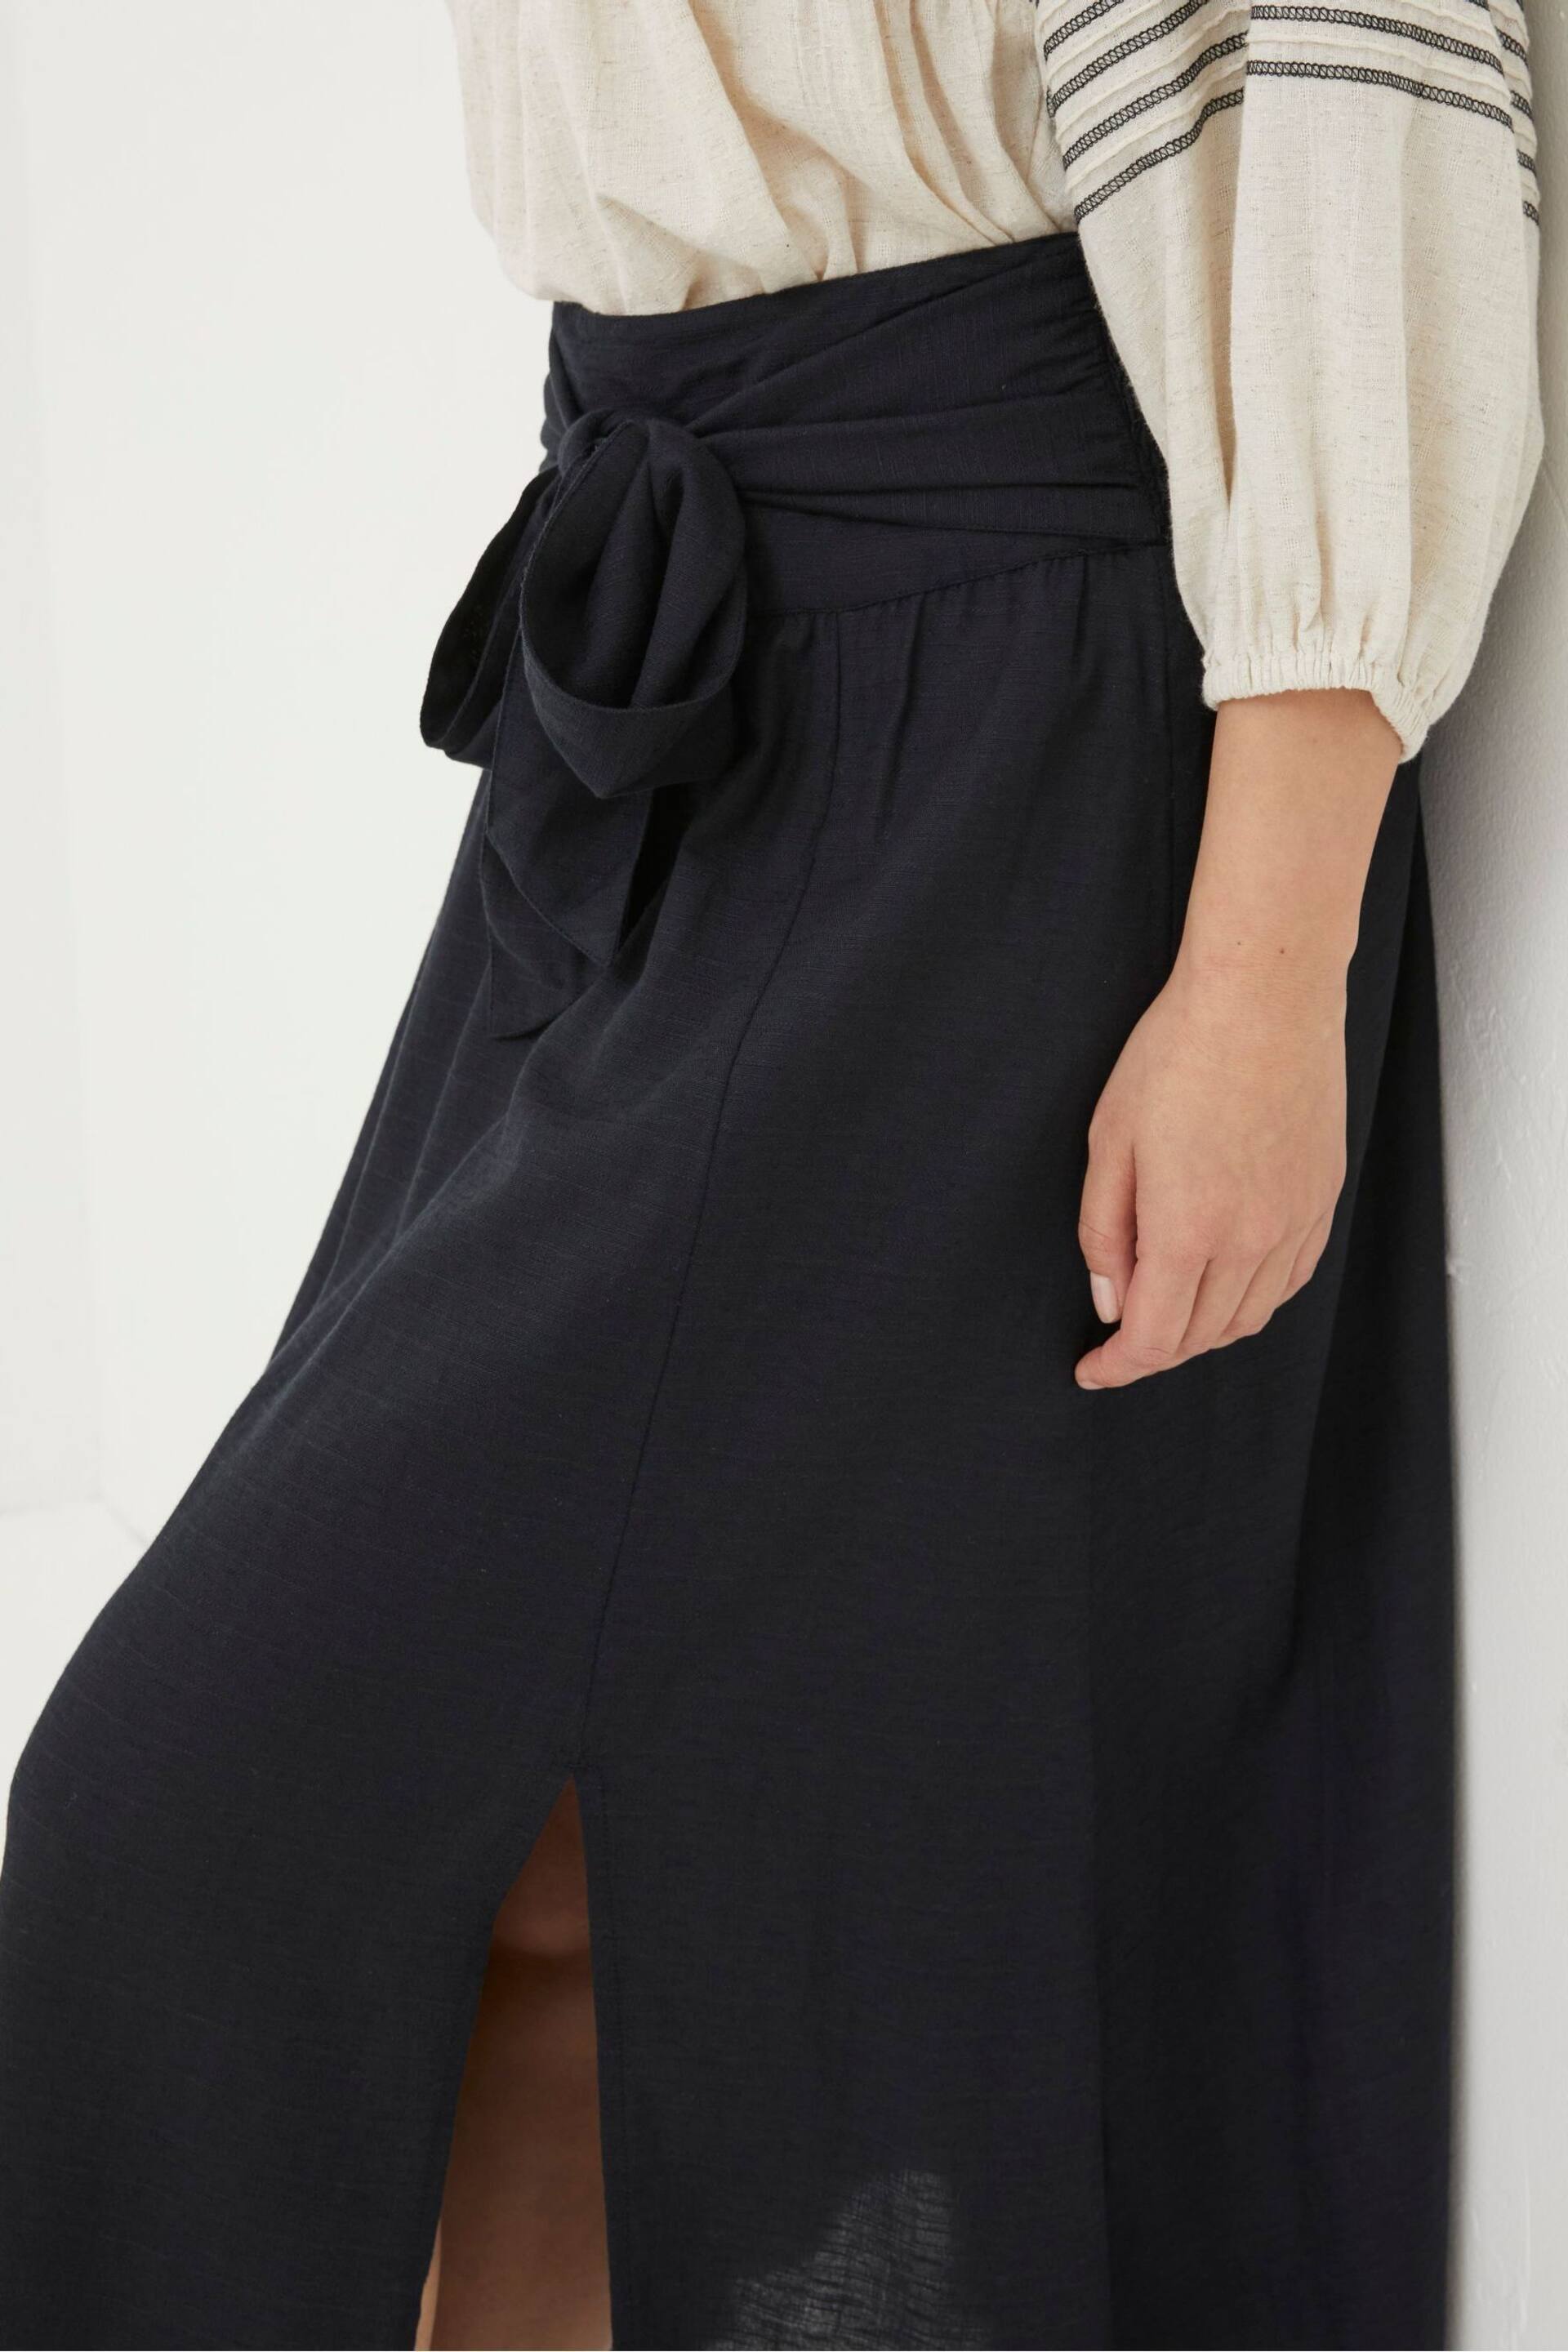 FatFace Black Sascha Midi Skirt - Image 4 of 5